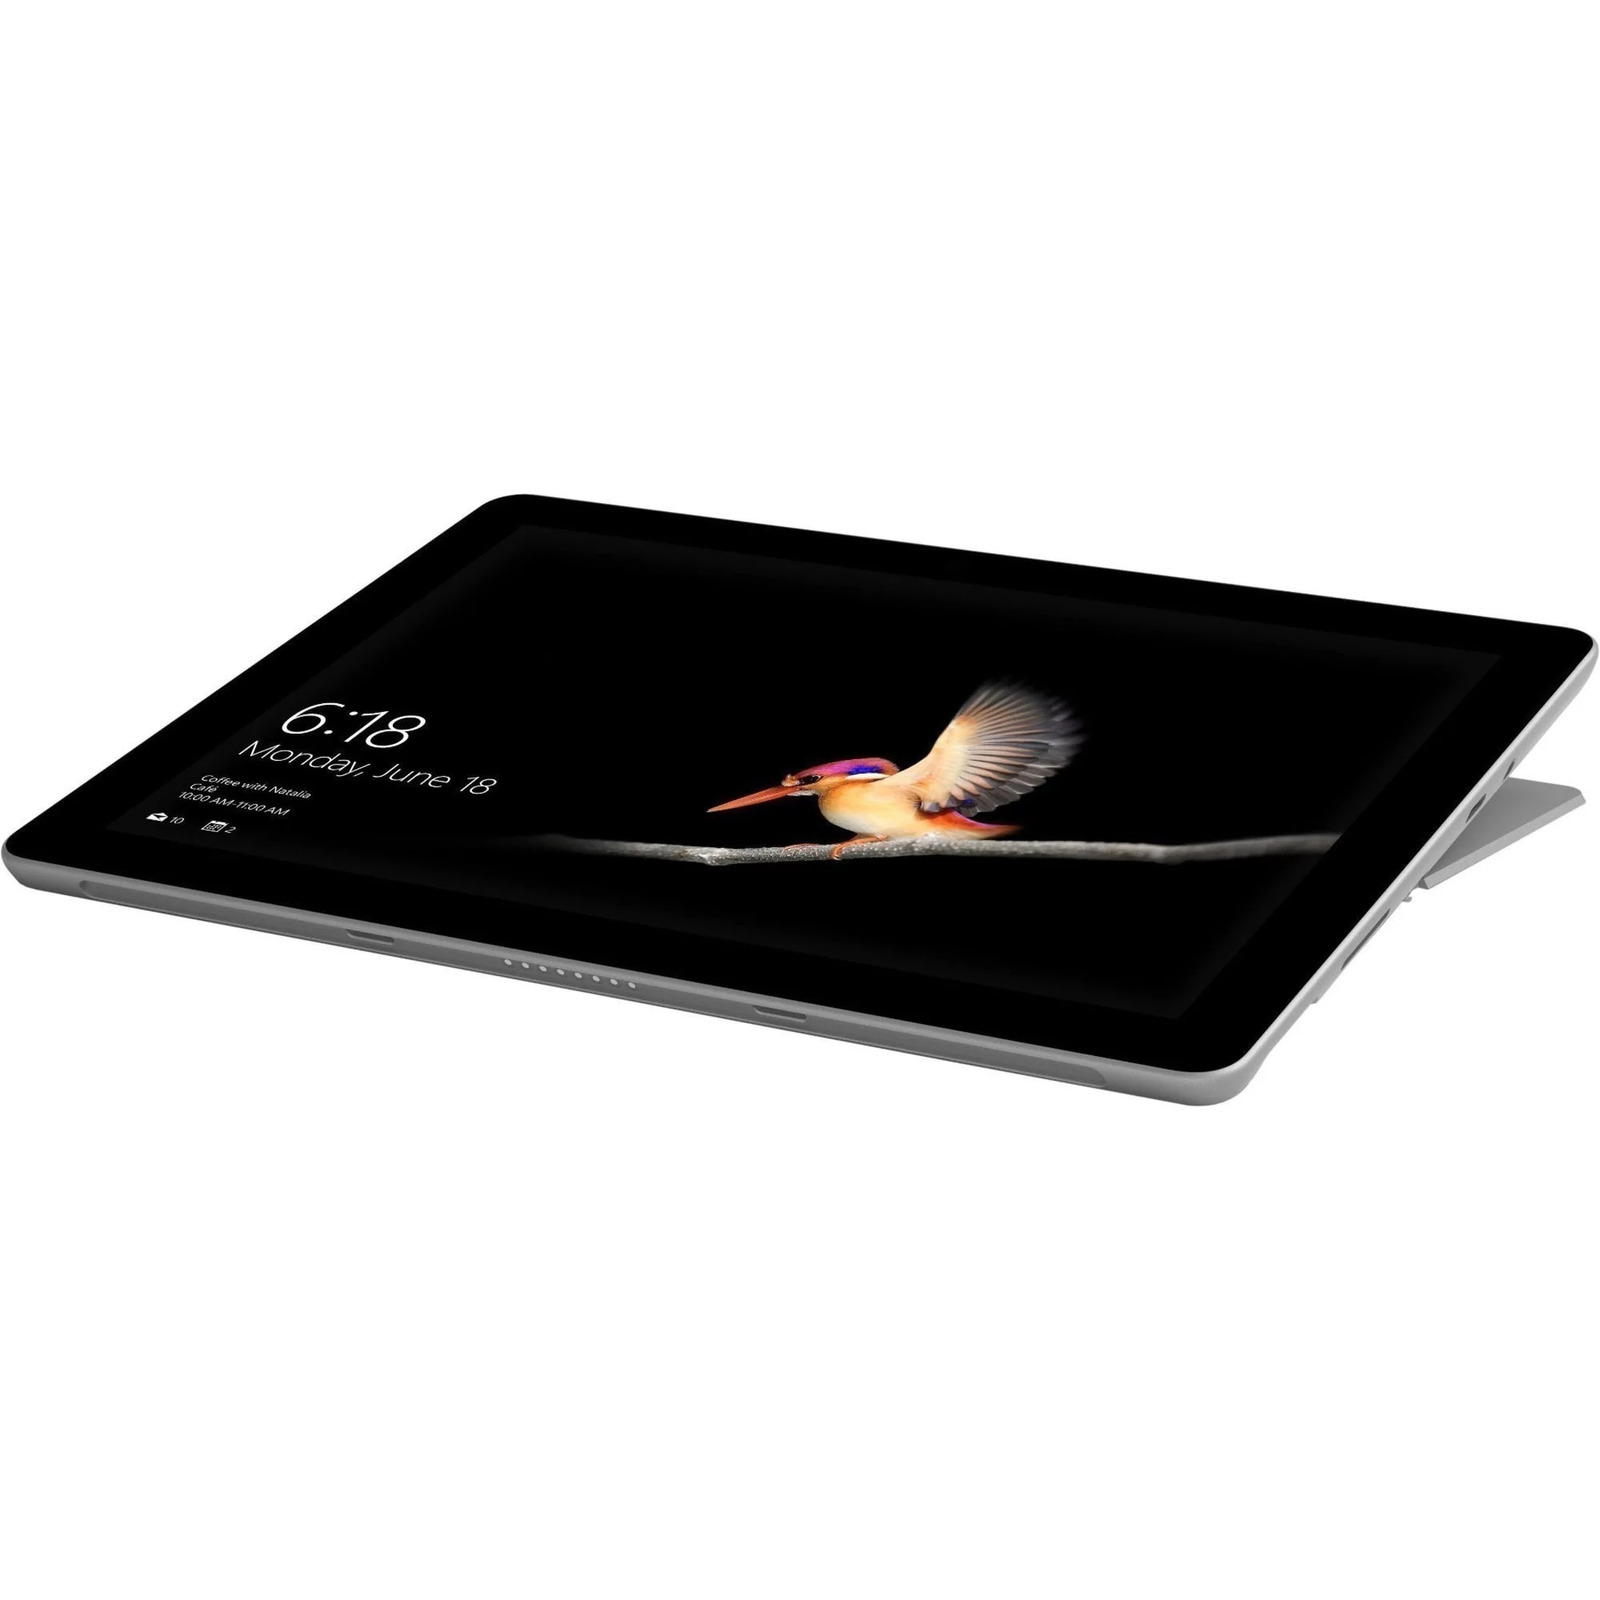 Microsoft Surface Go Intel Pentium 4415Y 1.60GHz 8GB RAM 128GB eMMC 10" NO OS Tablet Only Image 1